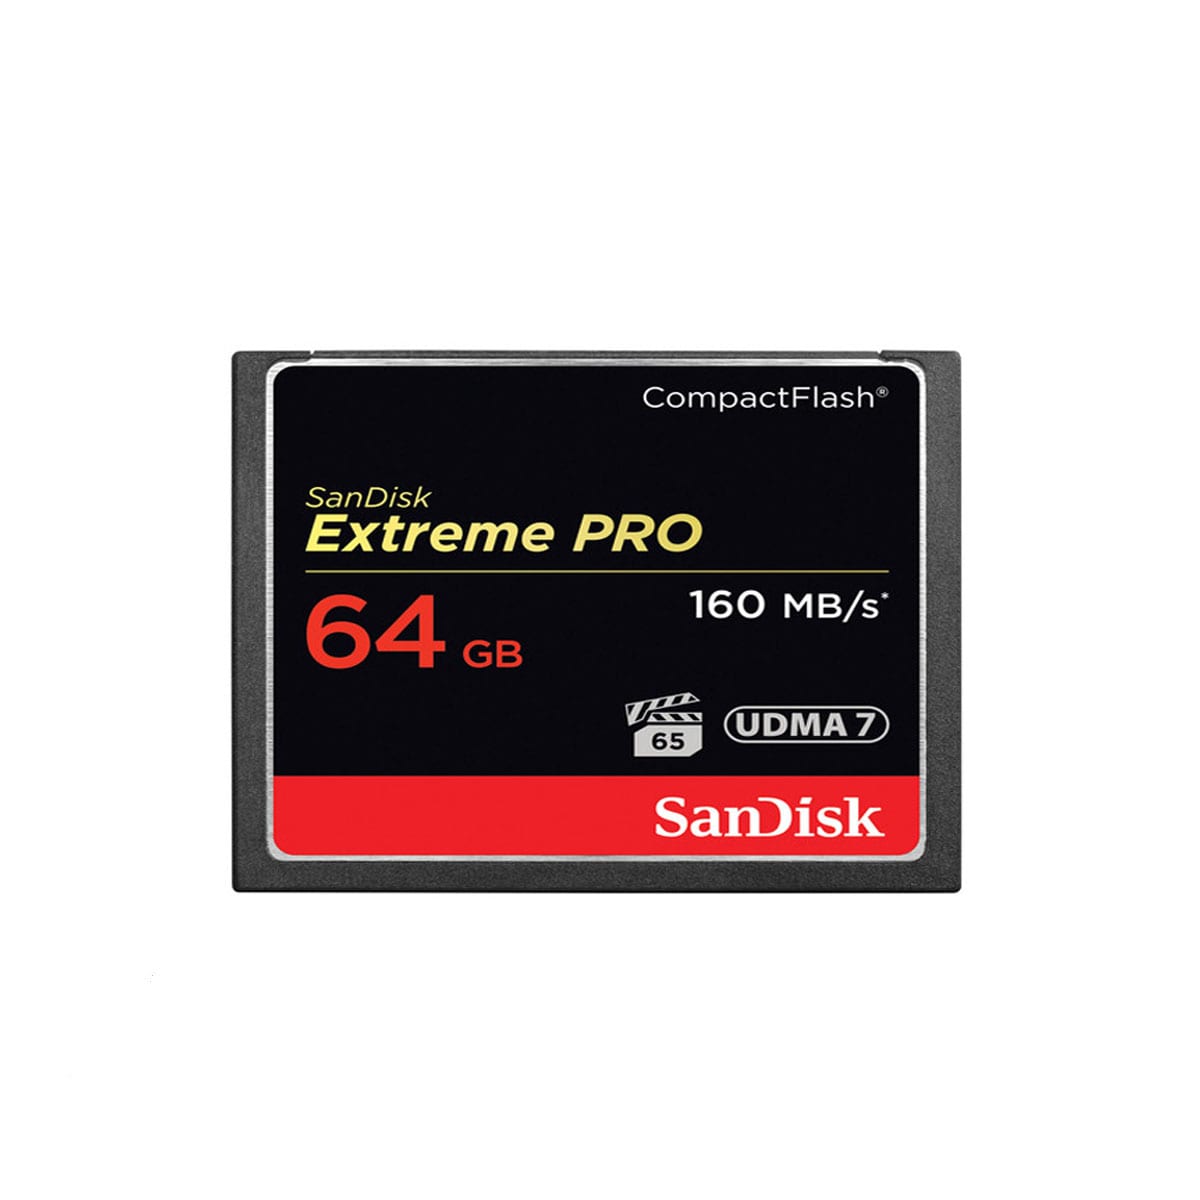 Sandisk CF Card, 64GB, 160MB/s